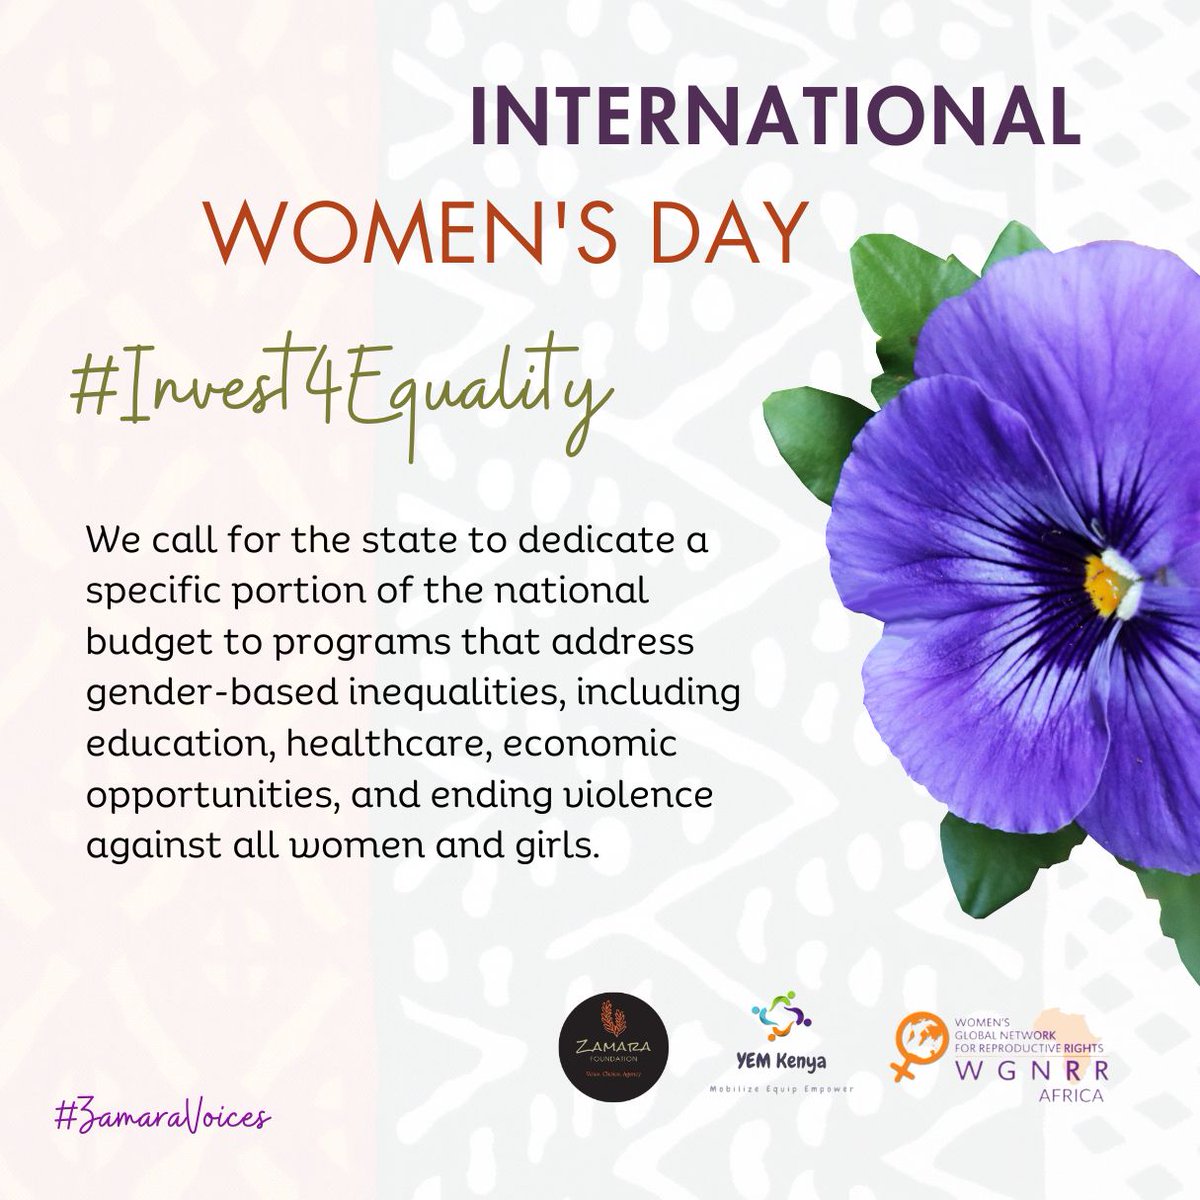 Women just wanna have the fundamental rights #invest4Equality
@Zamara_fdn 
@YEMKenya 
@wgnrr_africa